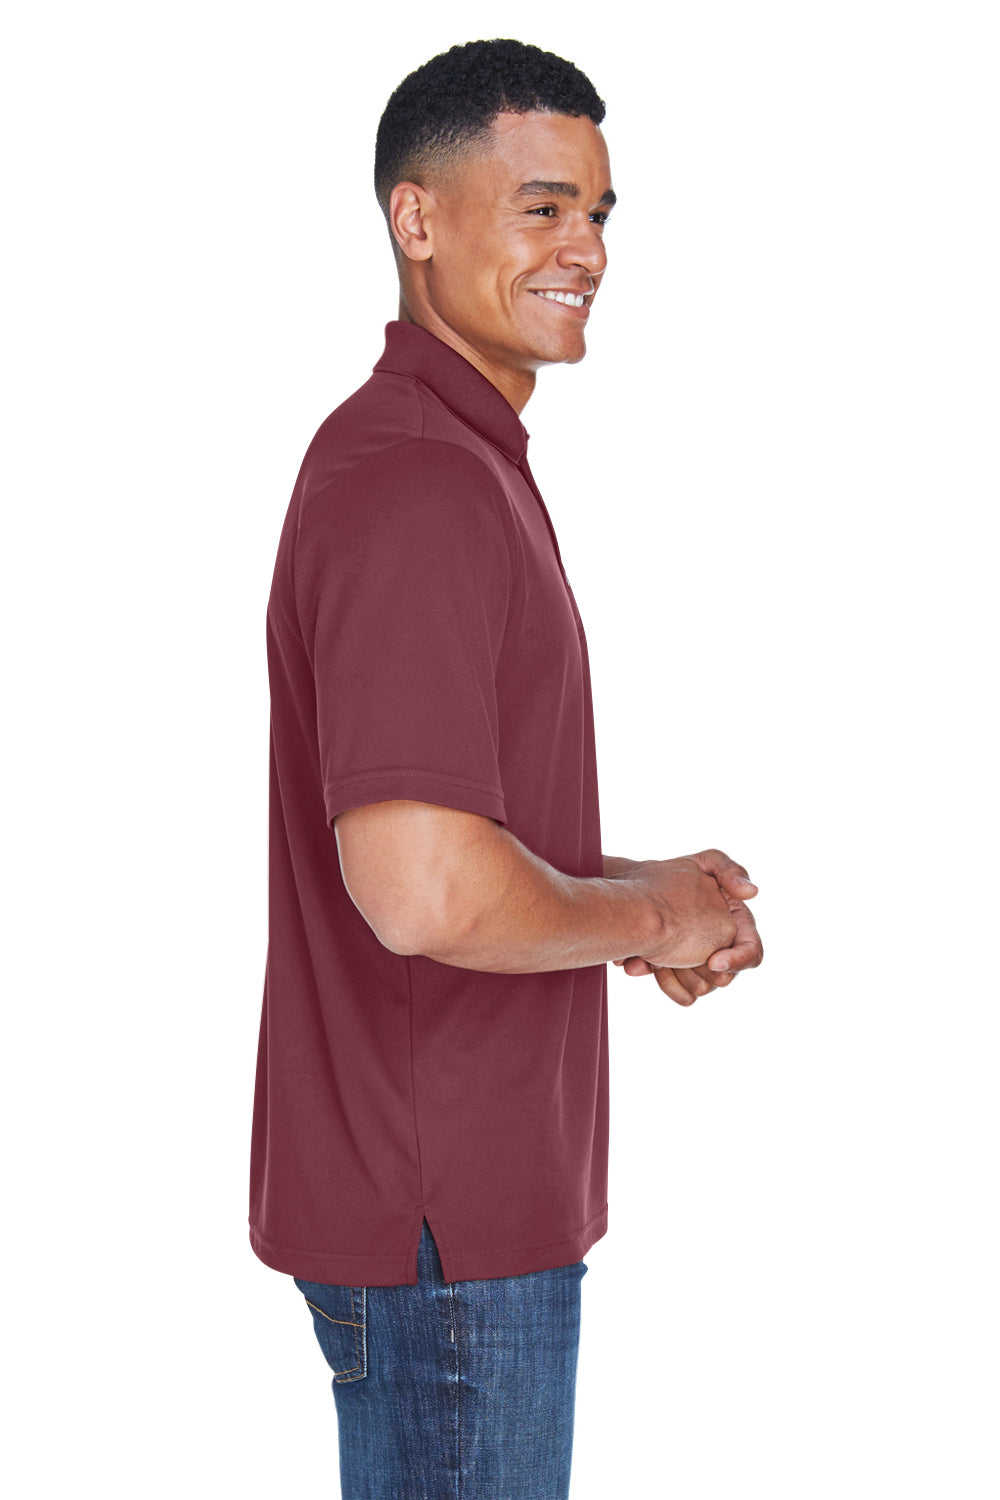 Core 365 88181P Mens Origin Performance Moisture Wicking Short Sleeve Polo Shirt w/ Pocket Burgundy Side